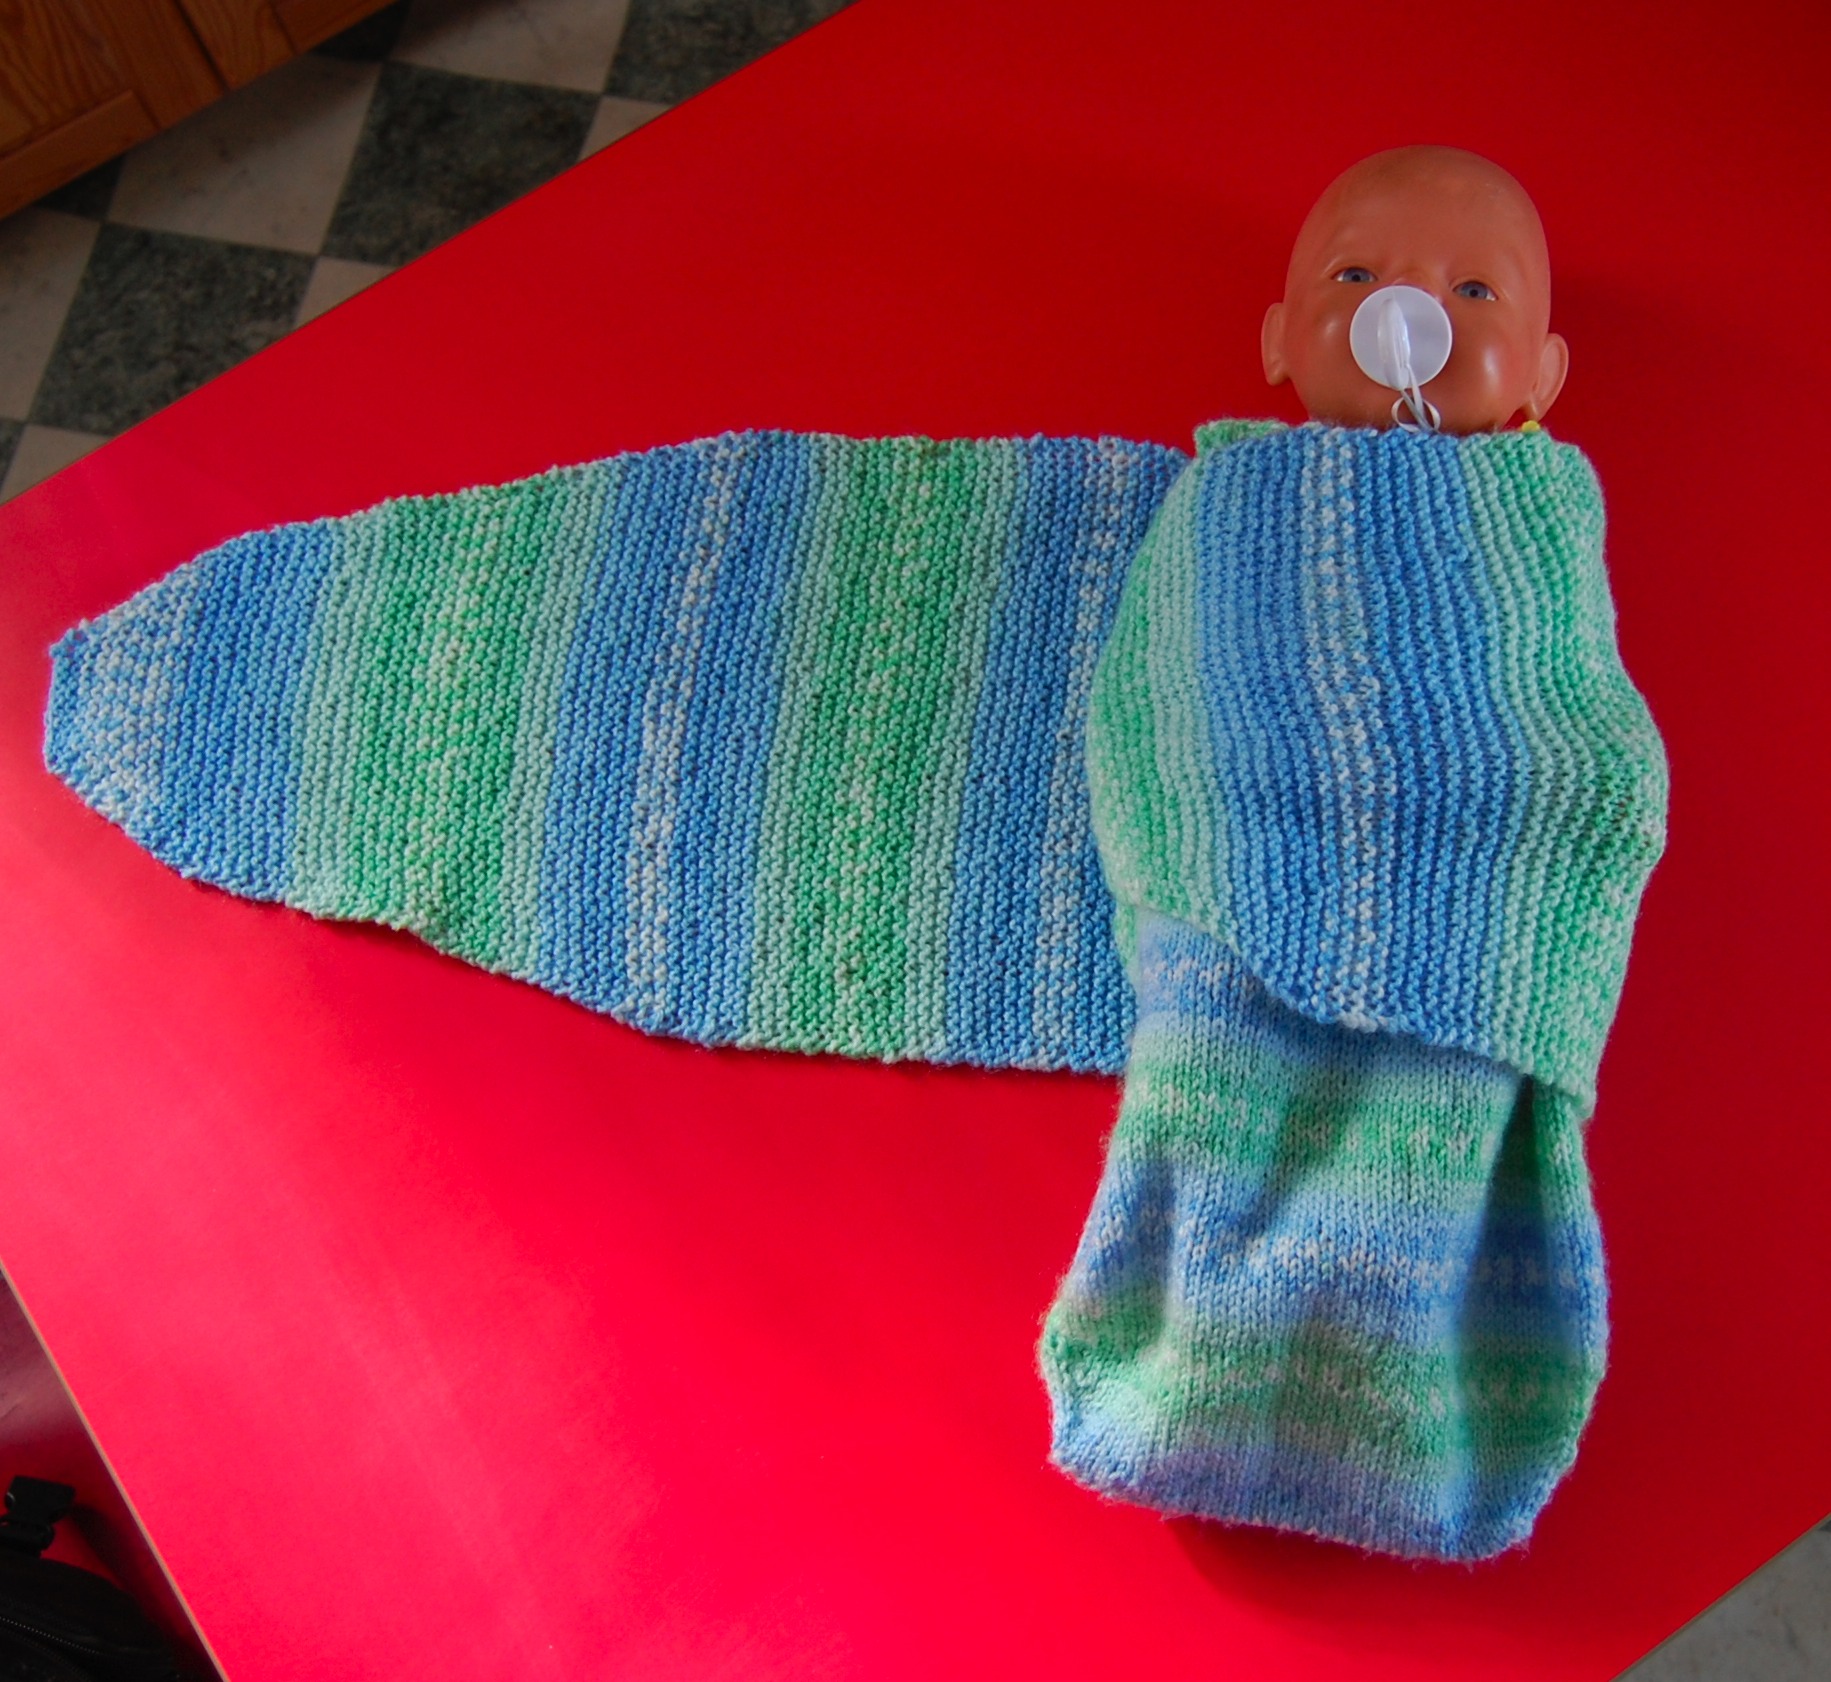 Swaddling baby blanket pattern? - Yahoo! Answers